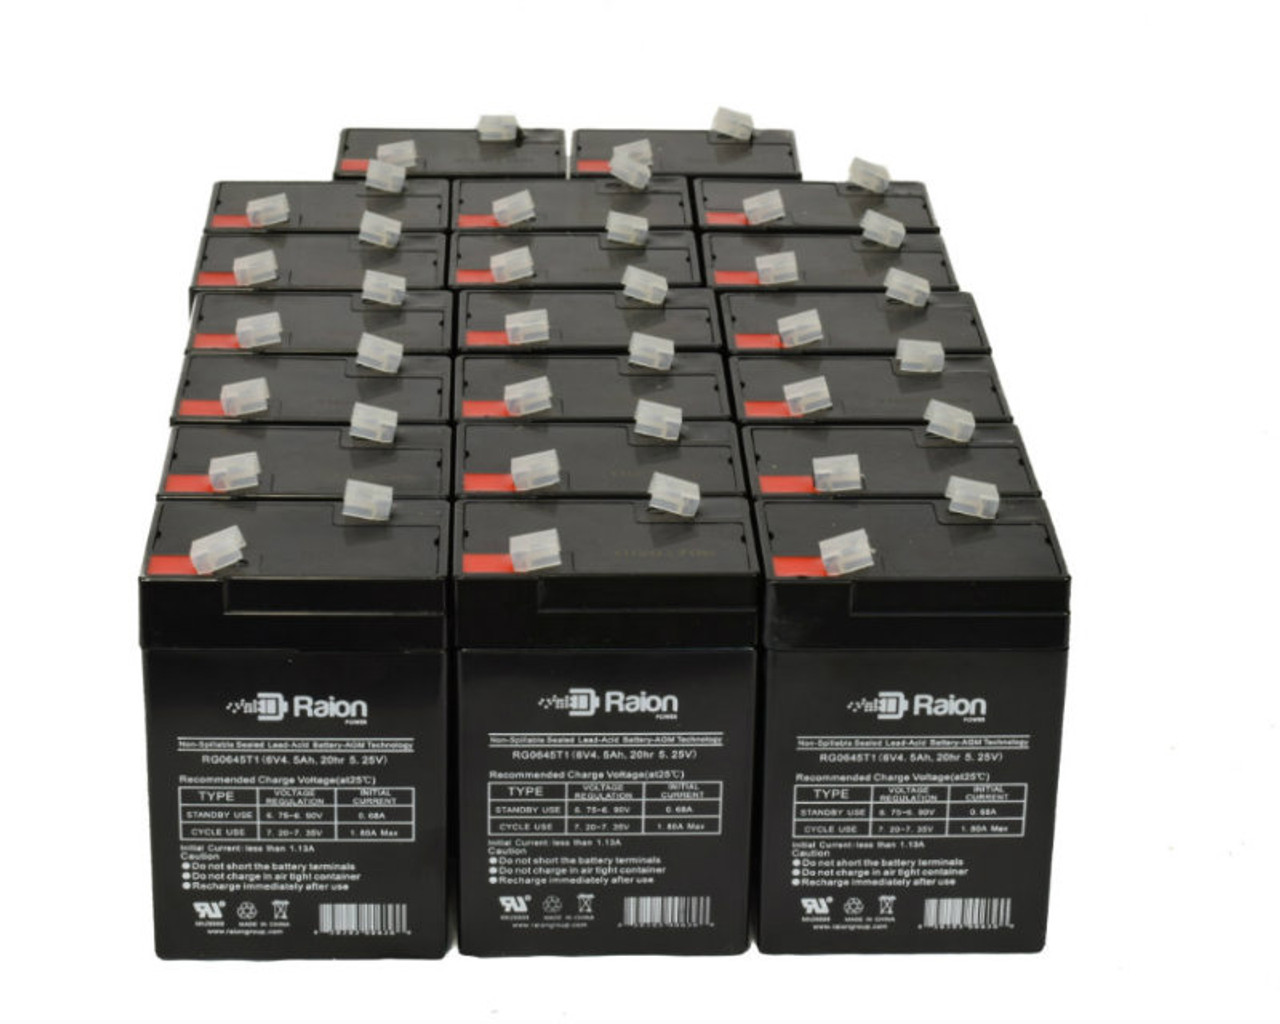 Raion Power 6 Volt 4.5Ah RG0645T1 Replacement Battery for Streamlight Vulcan - 20 Pack